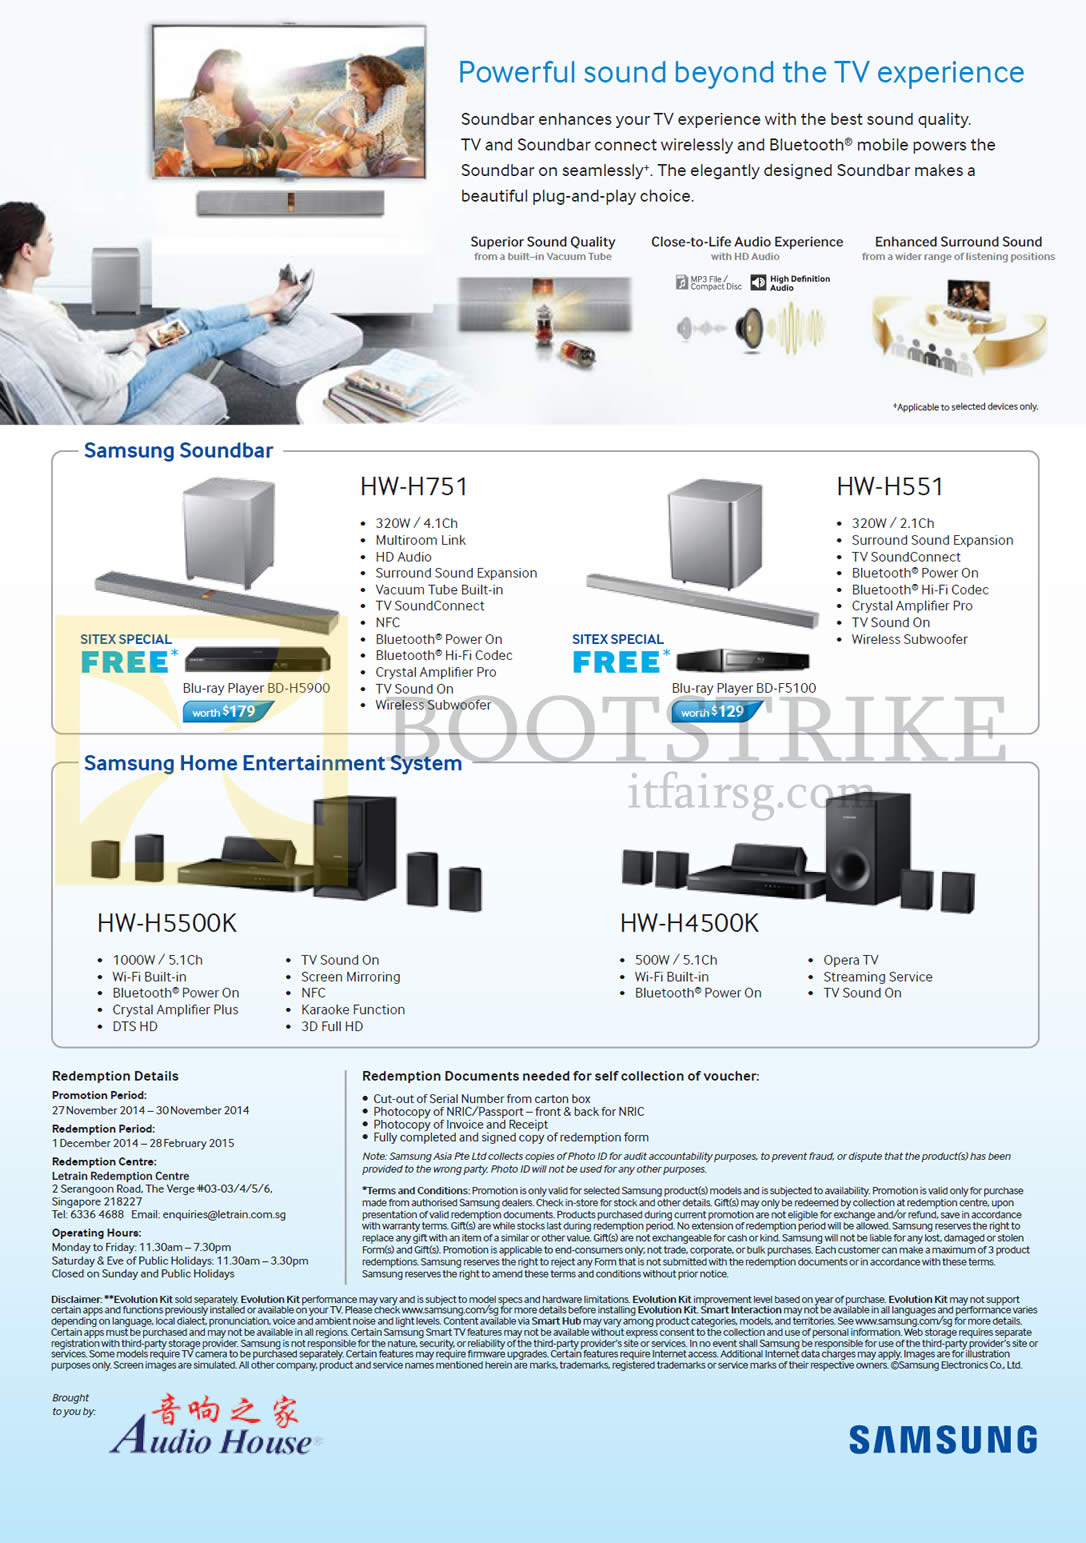 SITEX 2014 price list image brochure of Samsung Audio House Soundbar (No Prices), HW-H751, HW-H551, Home Entertainment System, HW-H5500K, HW-H4500K